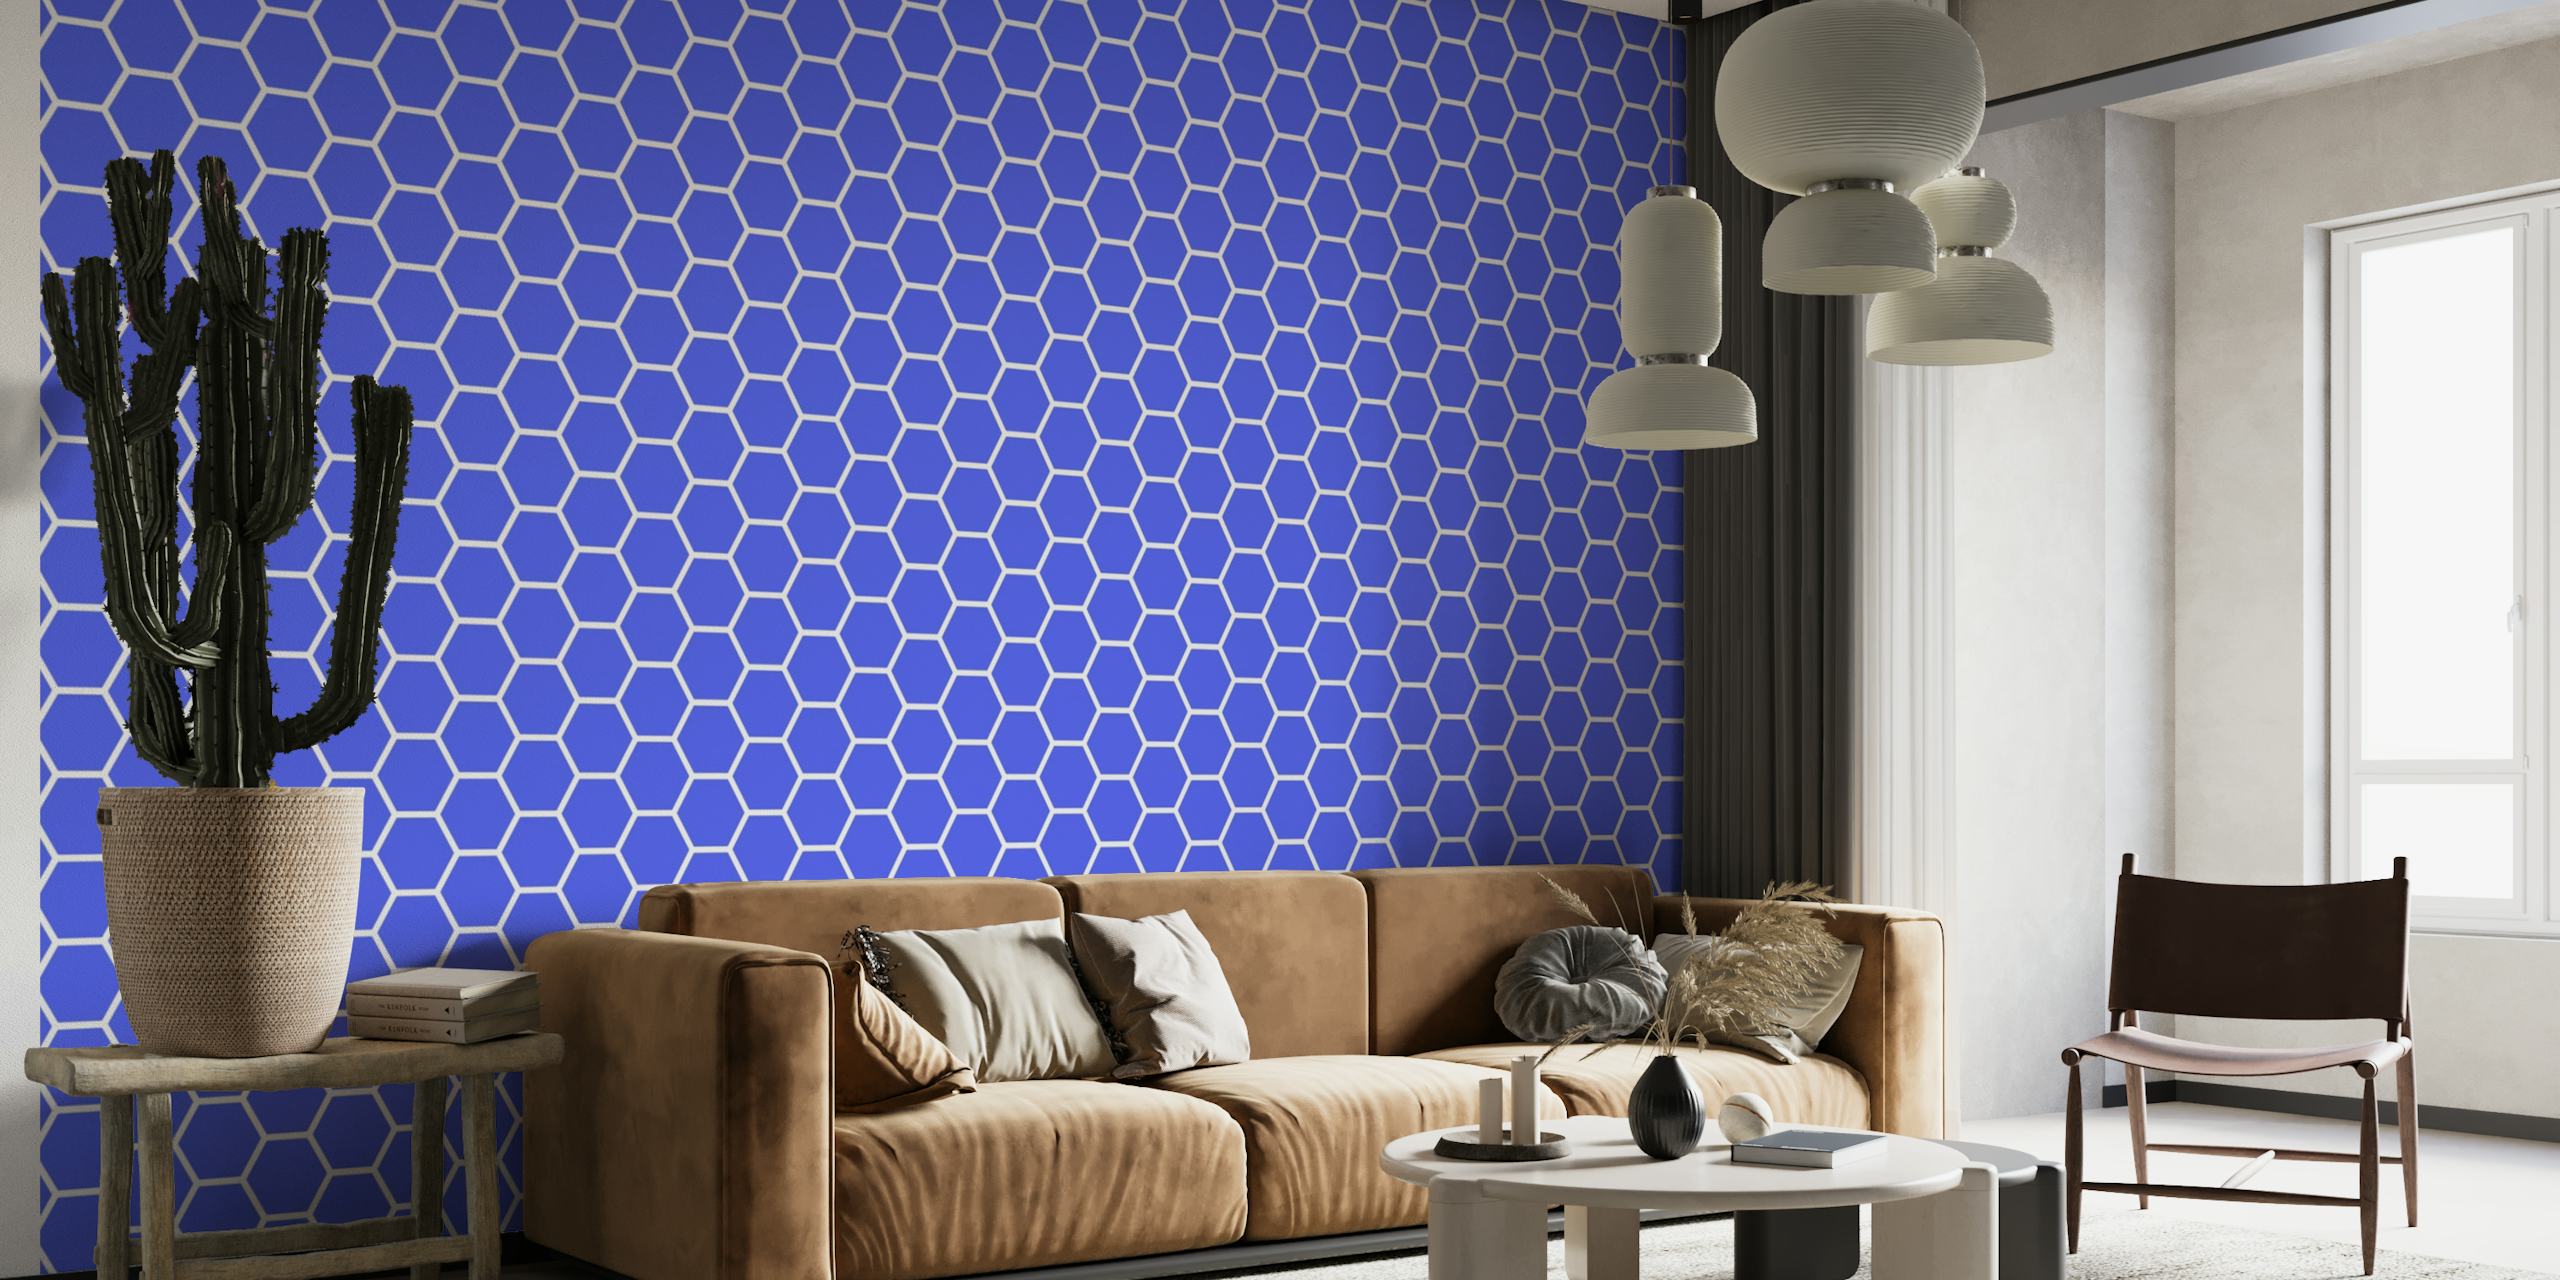 Fotomural de pared con patrón hexagonal azul brillante para una decoración interior contemporánea.